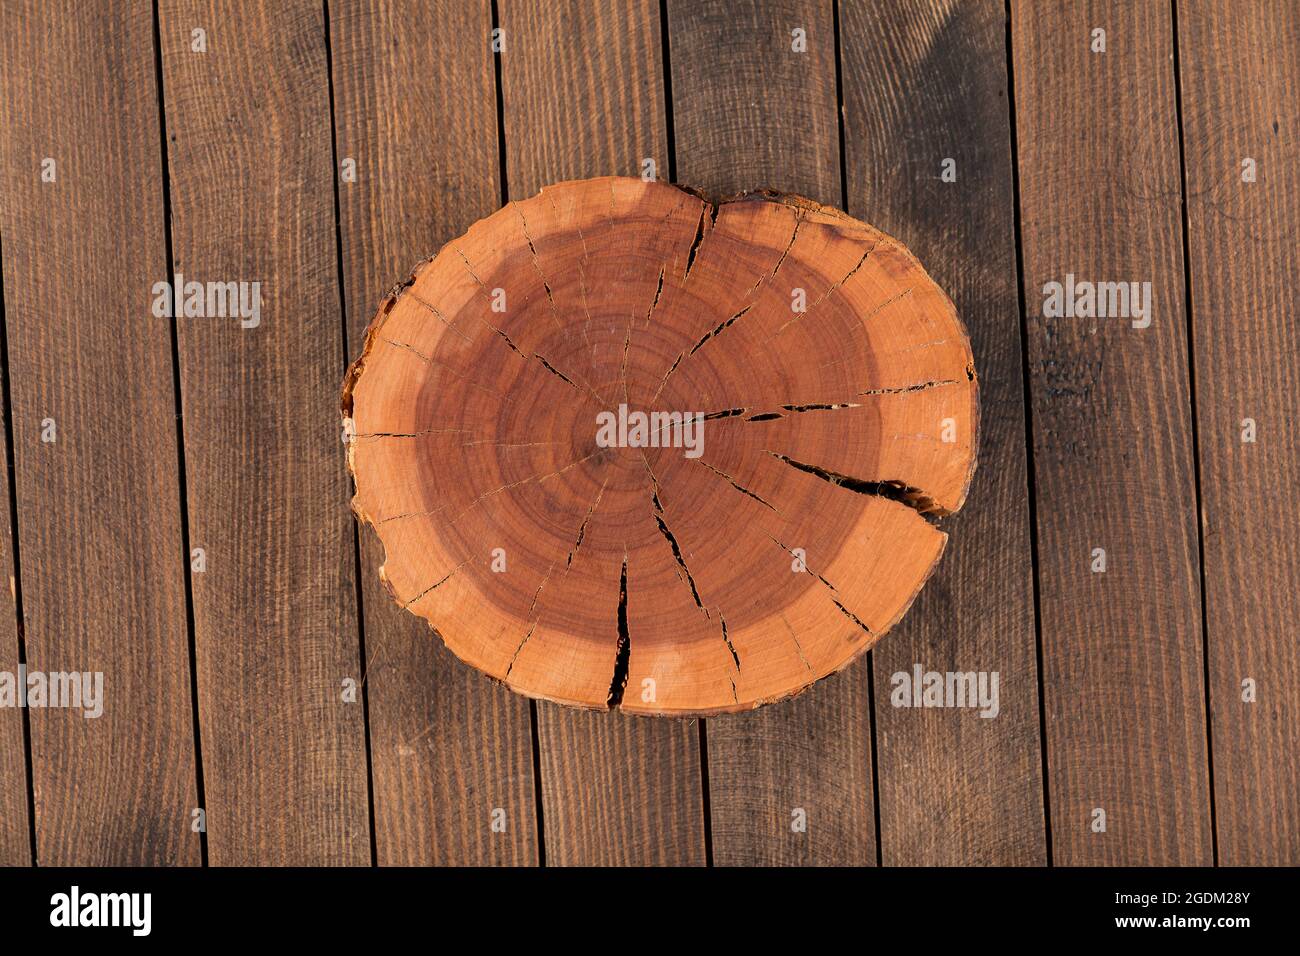 Top view natural decorative pine round wood slice Stock Photo